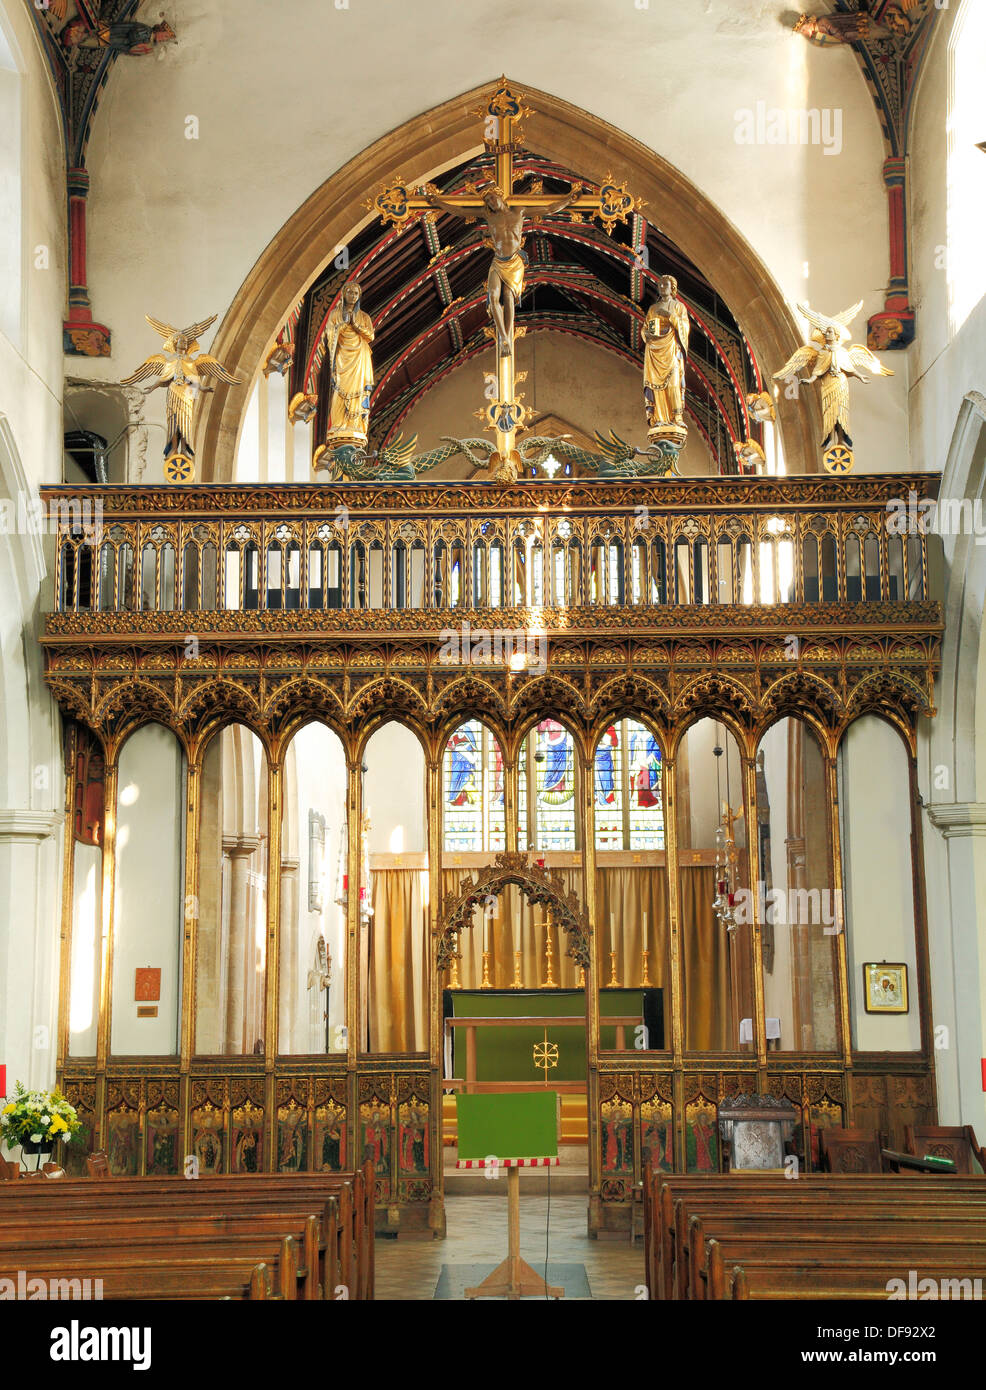 Occhio, Suffolk, medievale rood screen, vaulting e loft, parzialmente ricostruito da Sir Ninian Comper 1925, Inghilterra chiesa interna Foto Stock